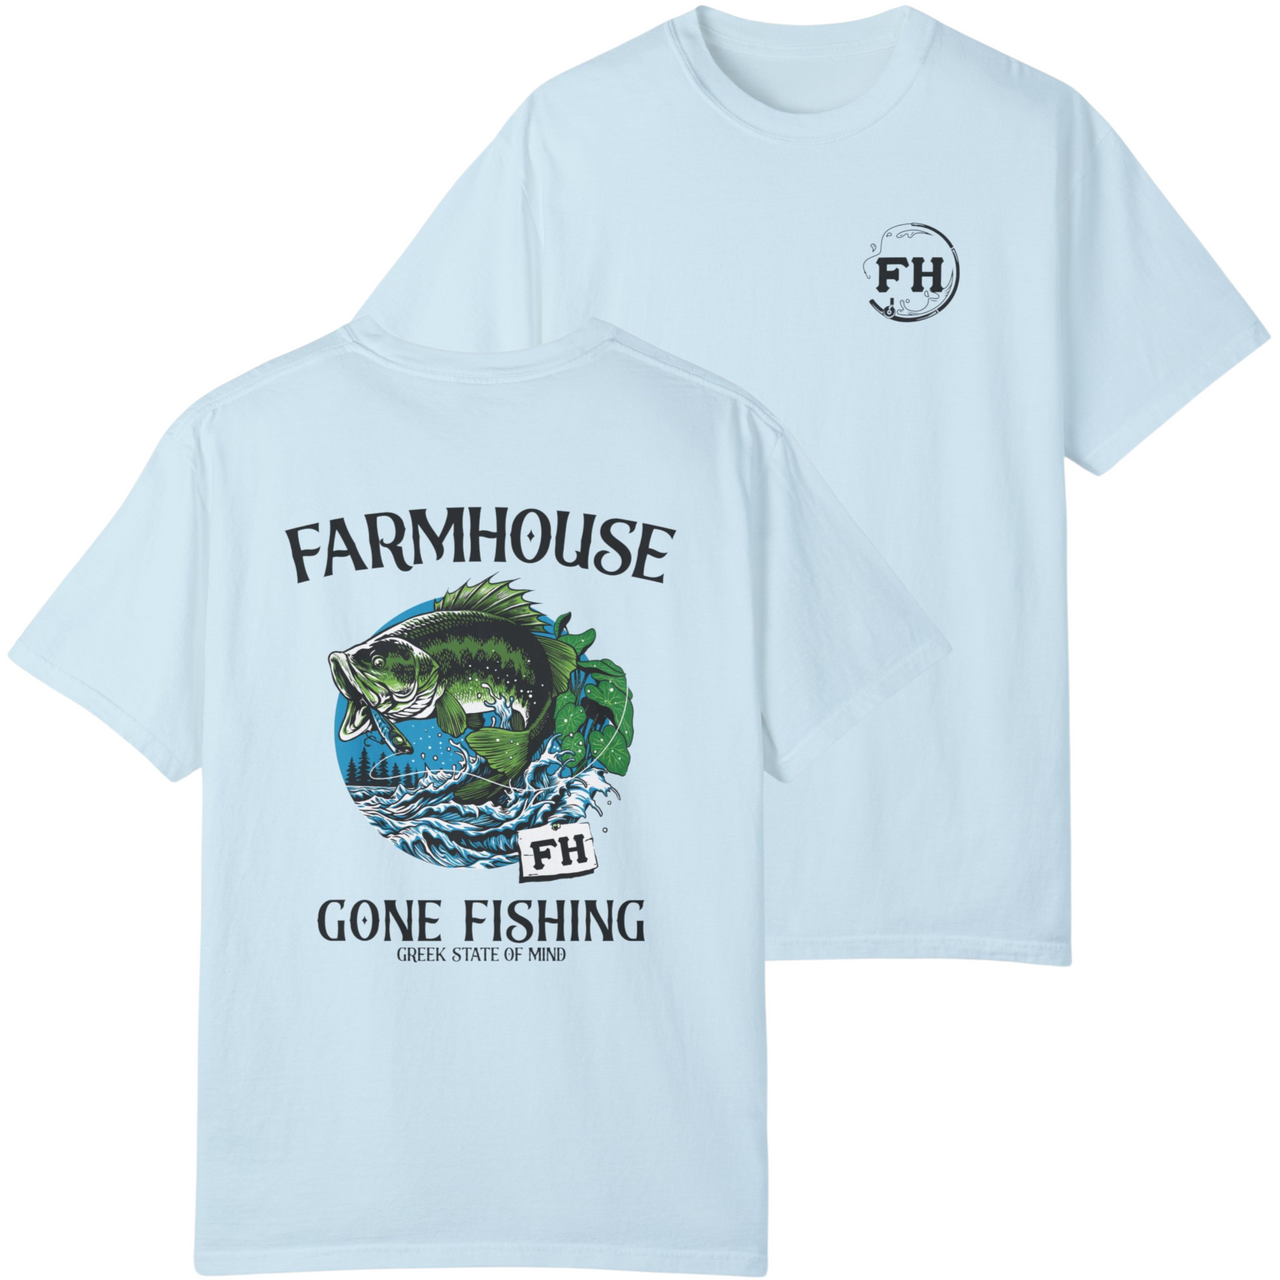 FarmHouse Graphic T-Shirt | Gone Fishing